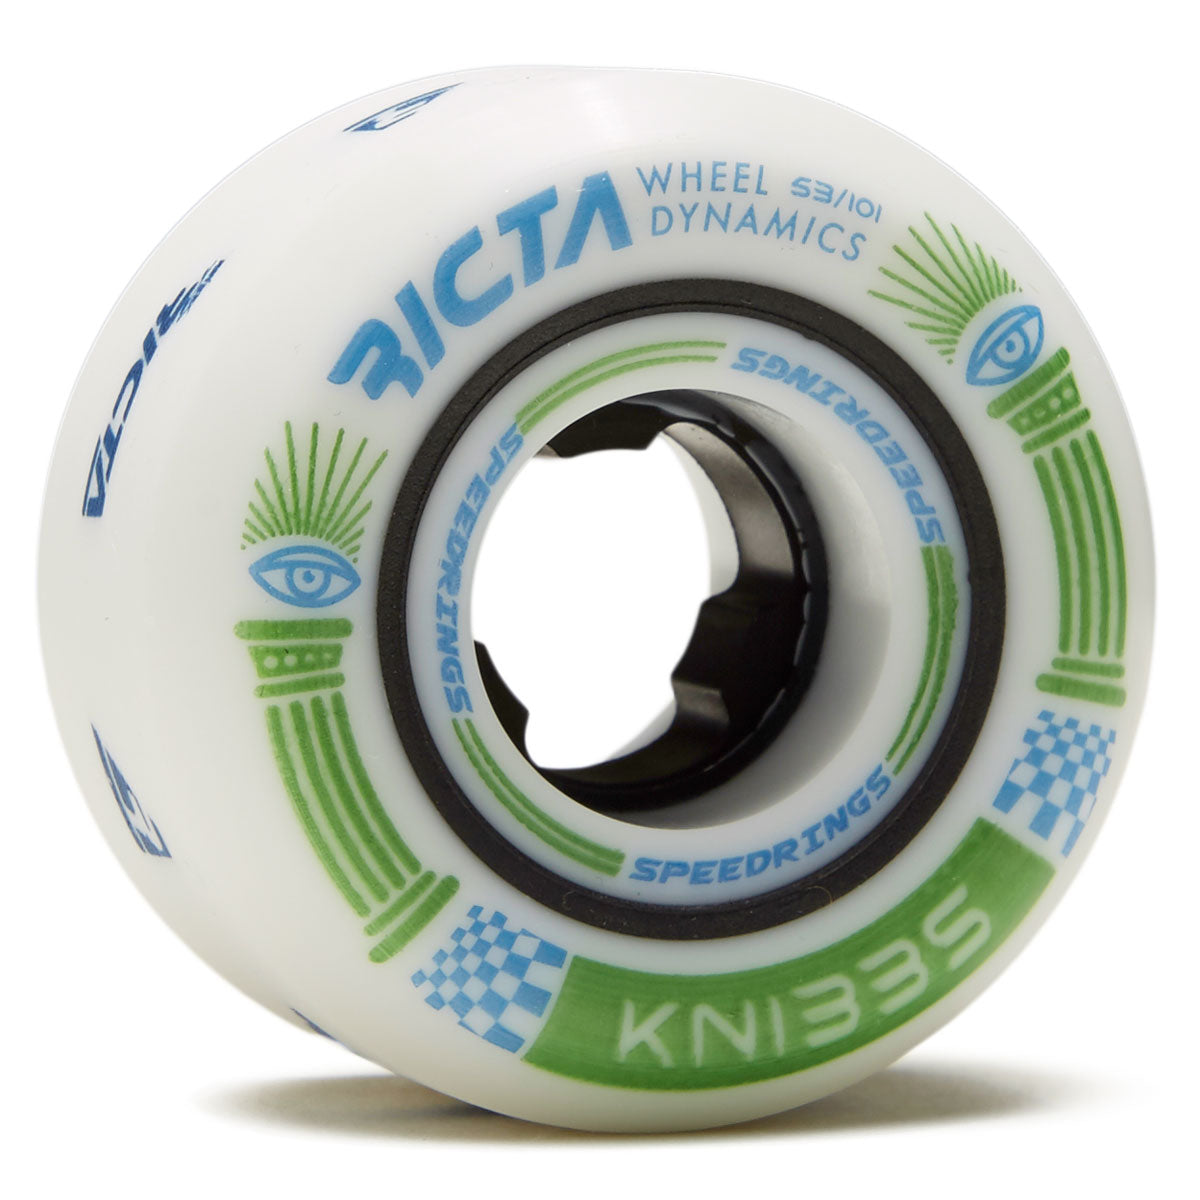 Ricta Knibbs Speedrings Wide 101a Skateboard Wheels - White - 53mm image 1